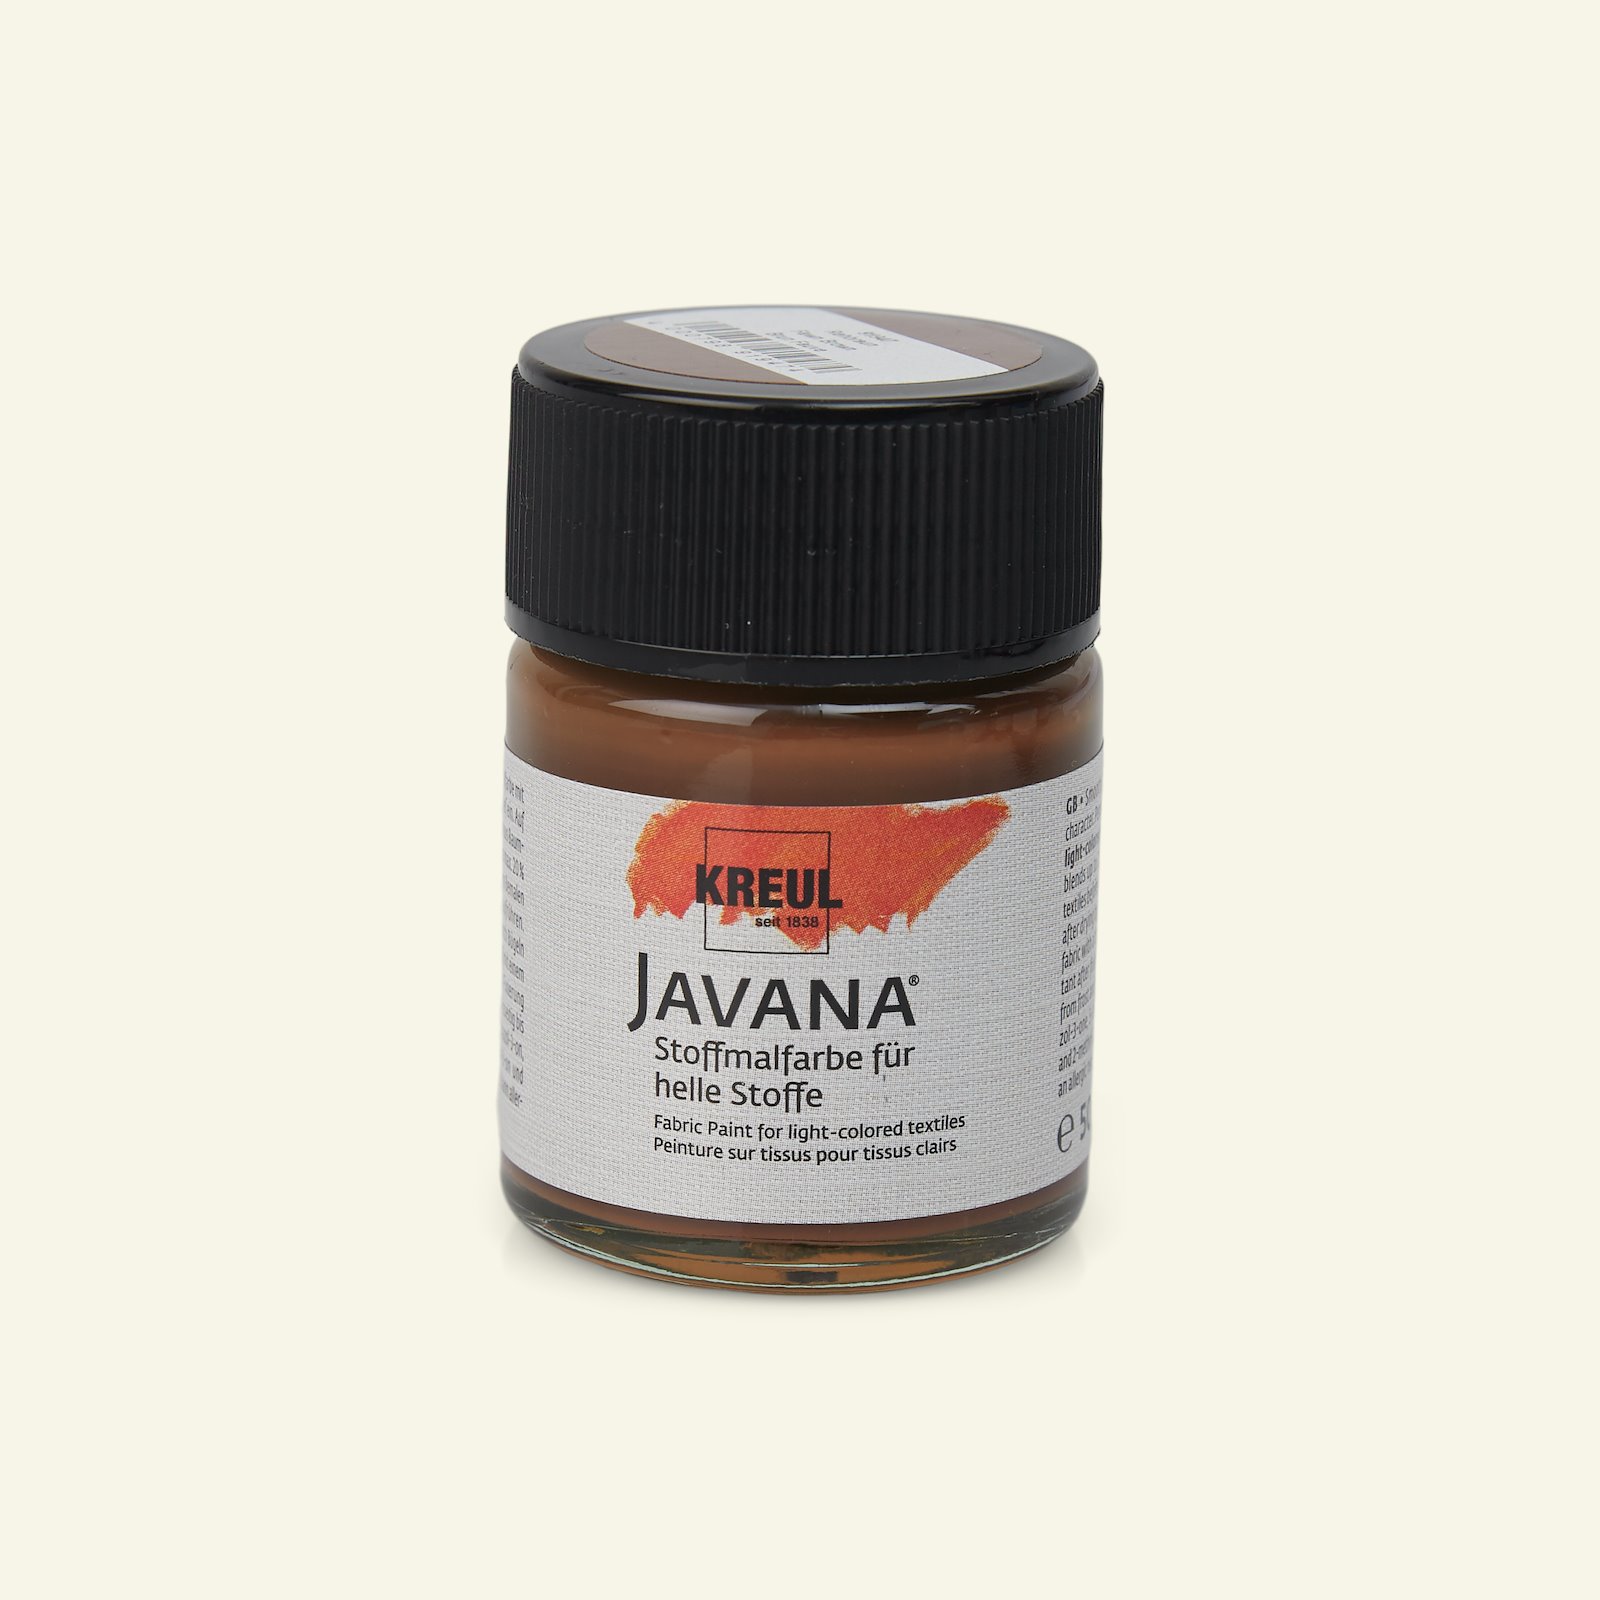 Javana tekstilfarge, brun, 50ml 29618_pack_b